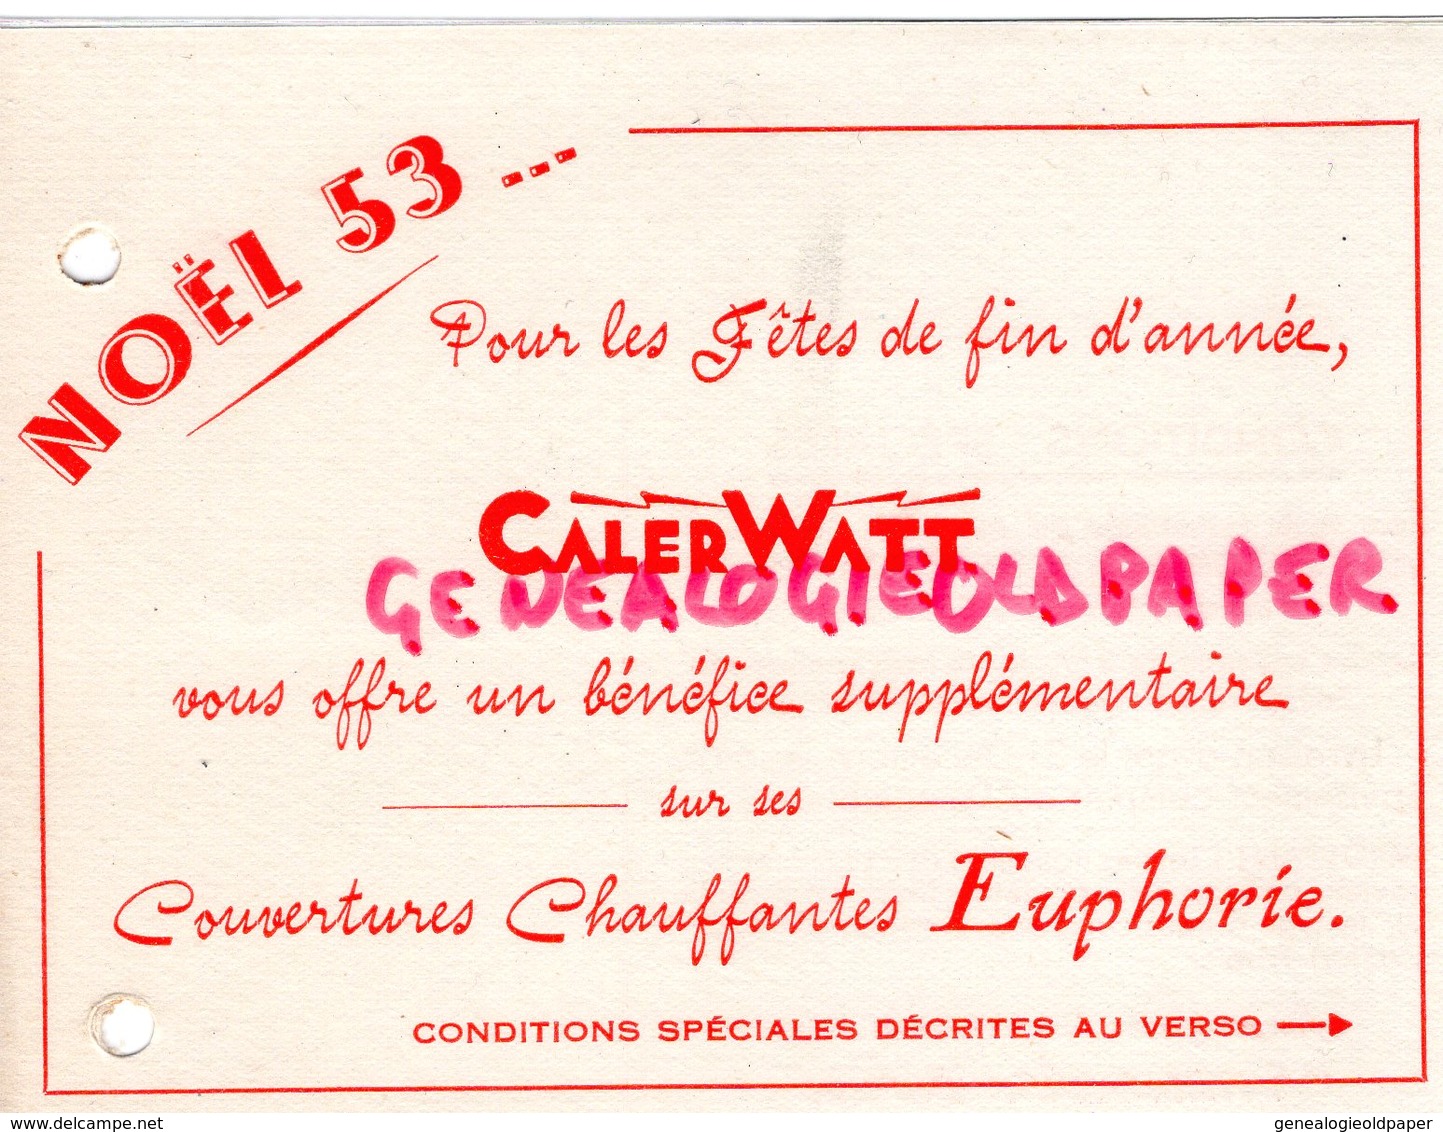 86- POITIERS - RARE CARTON PUBLICITAIRE CALERWATT- NOEL 1953- COUVERTURES CHAUFFANTES EUPHORIE - Werbung